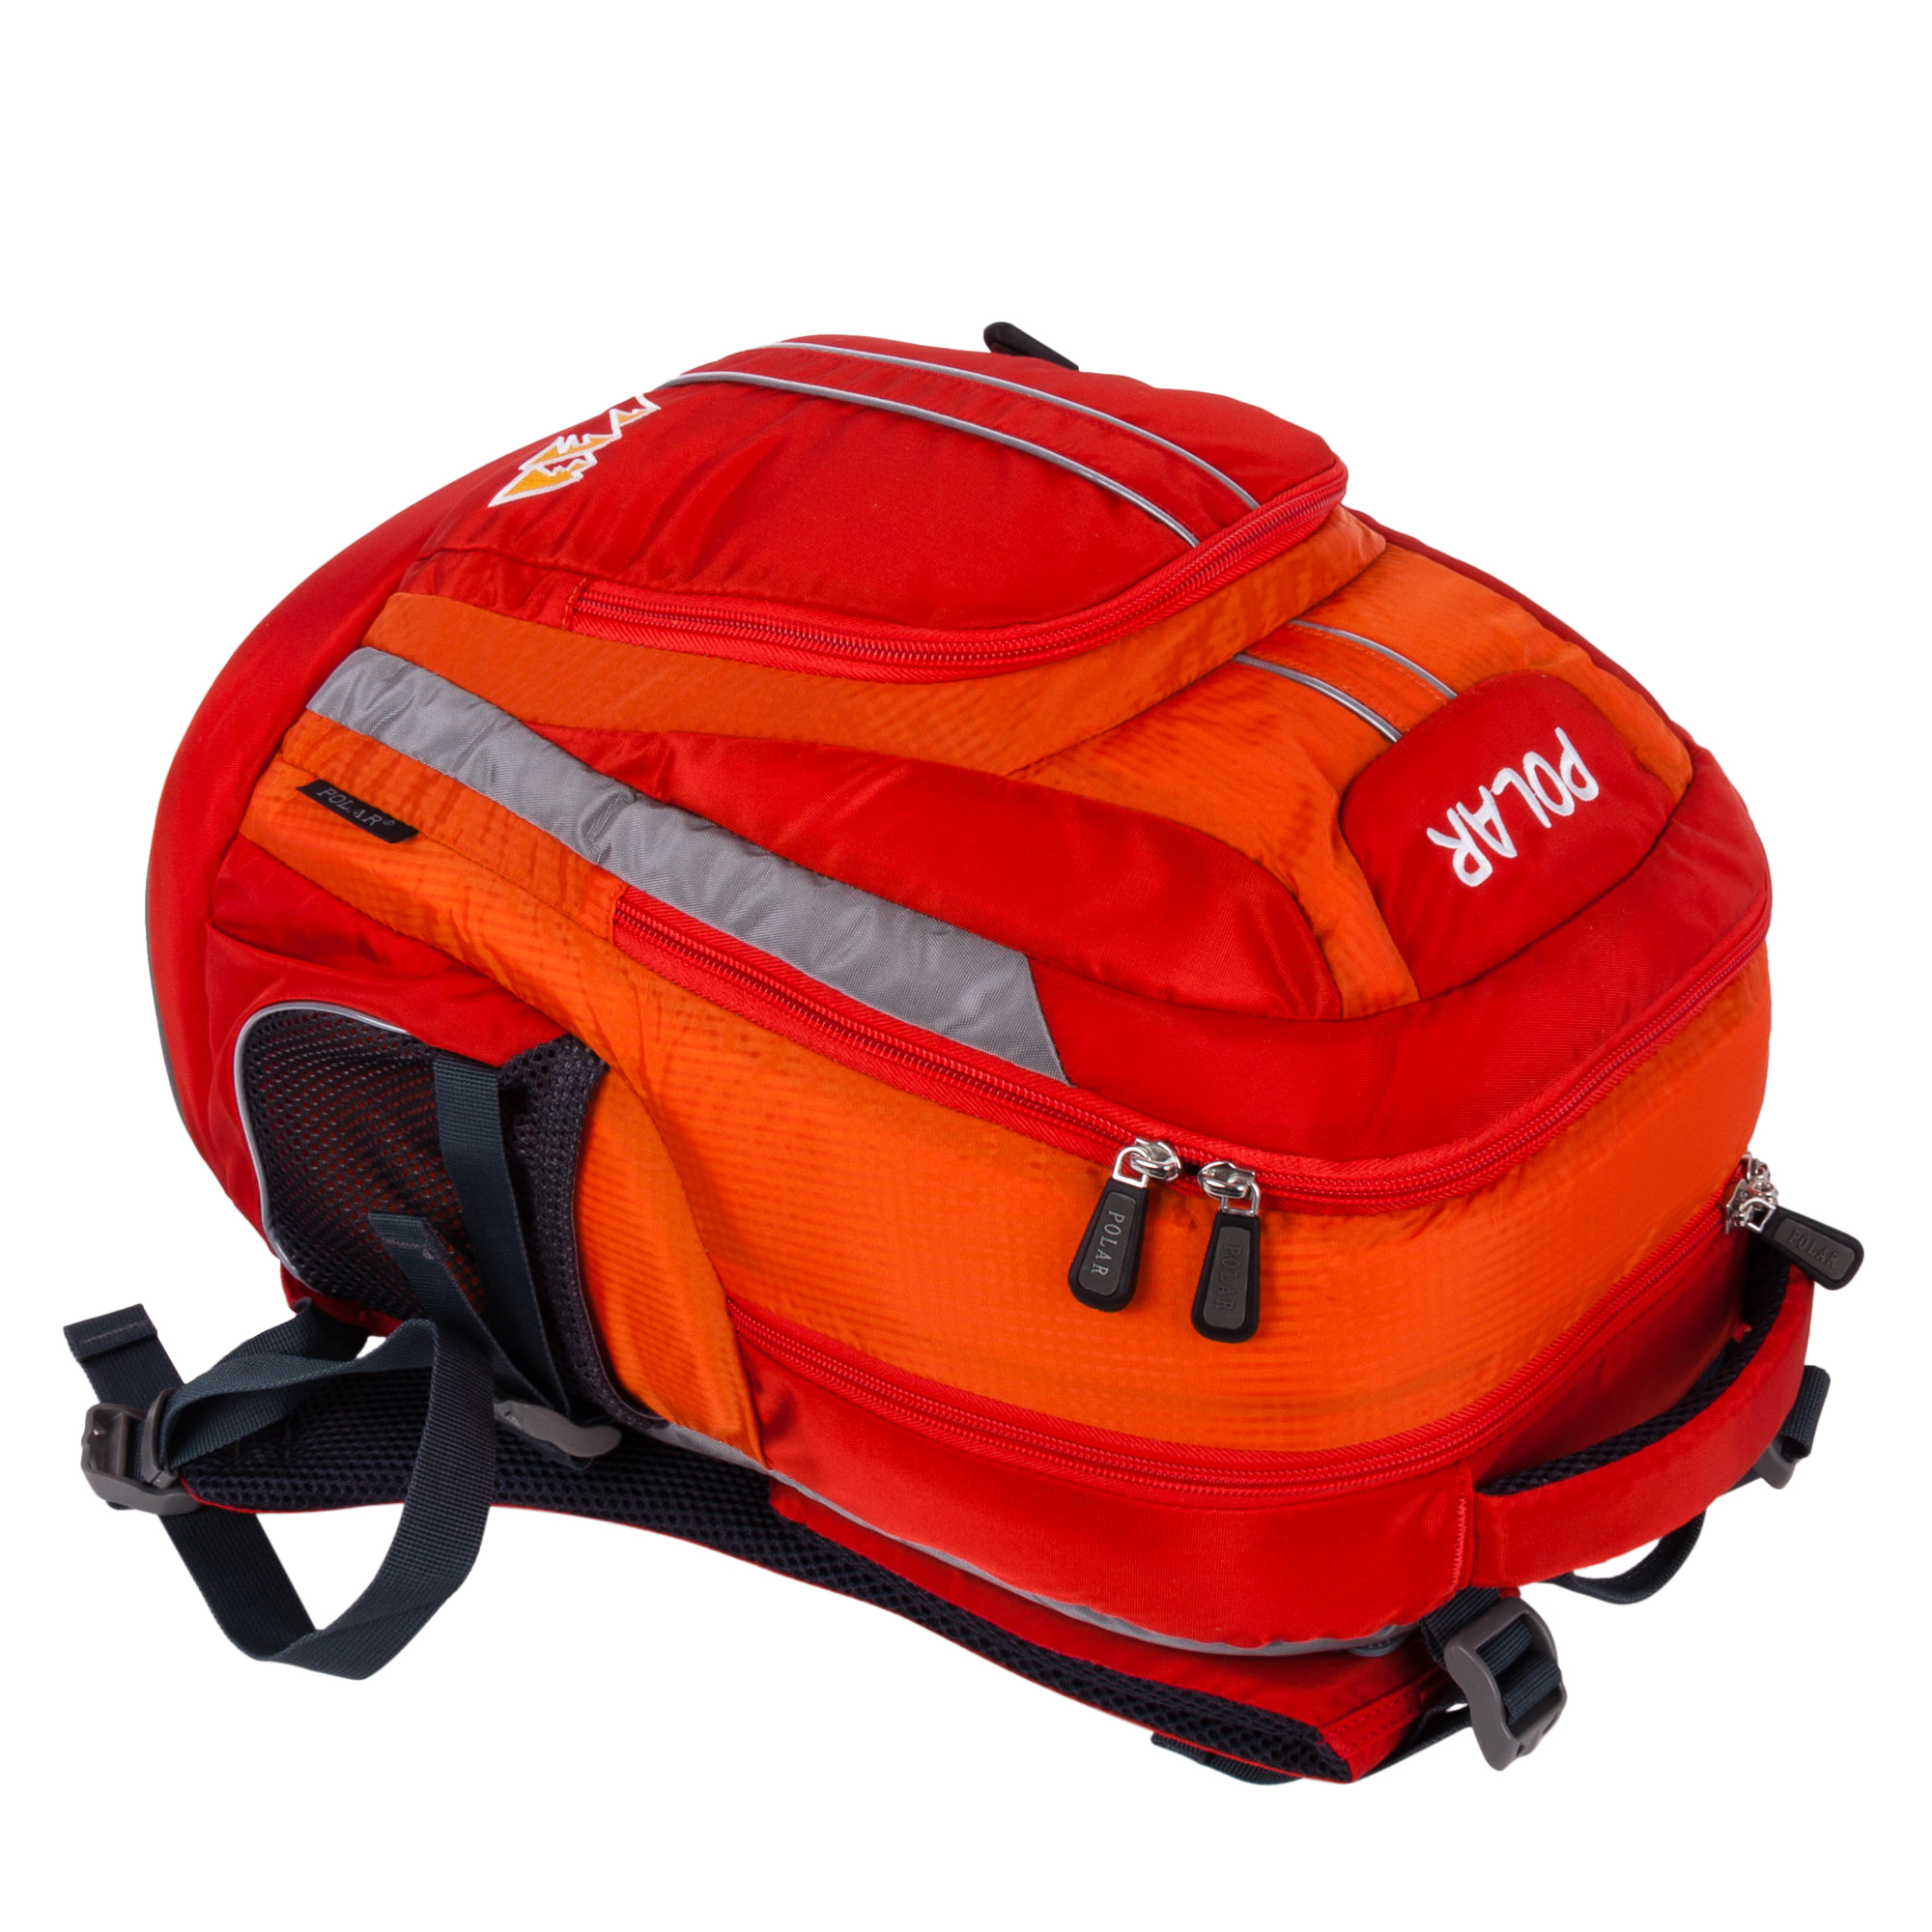 Рюкзак Polar П221 24 л оранжевый